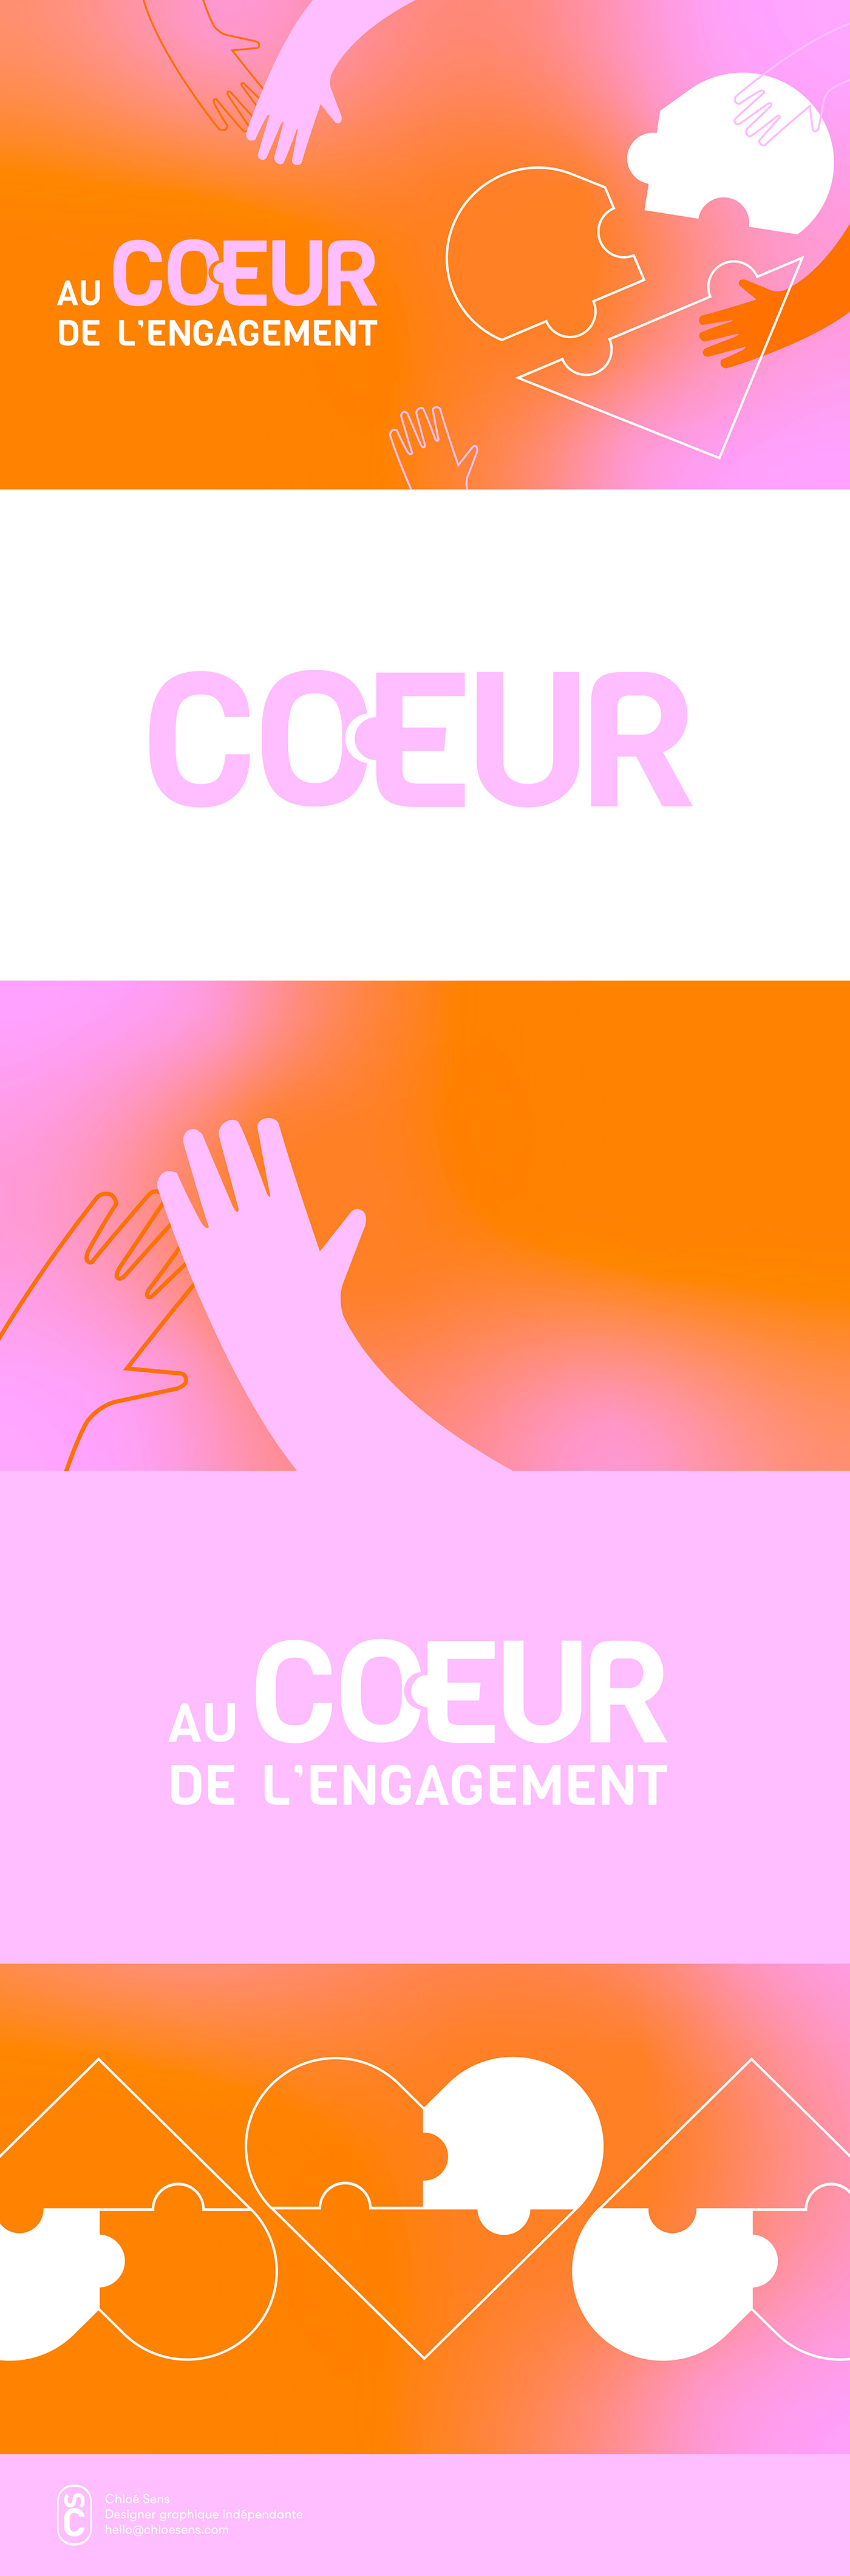 graphisme graphic design  ILLUSTRATION  typography   poster visual identity campaign orange rose pink